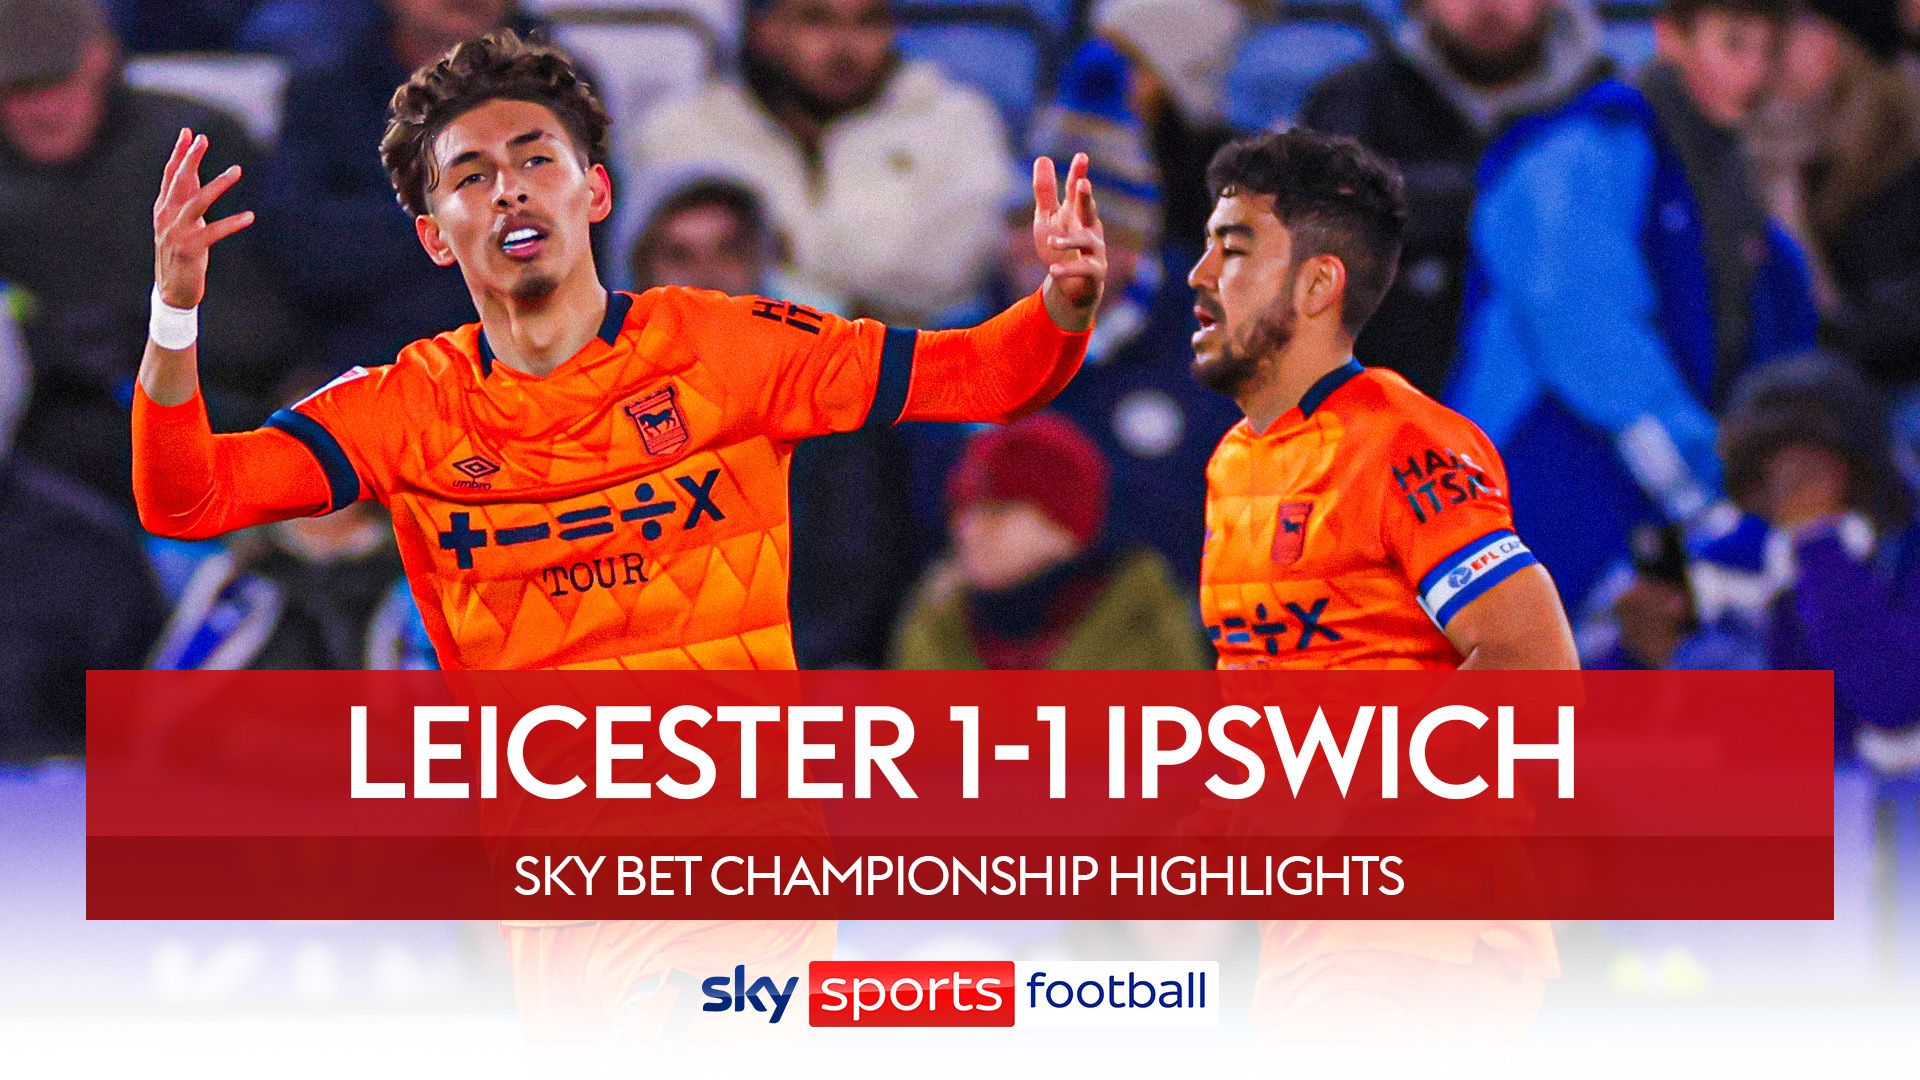 Leicester 1-1 Ipswich